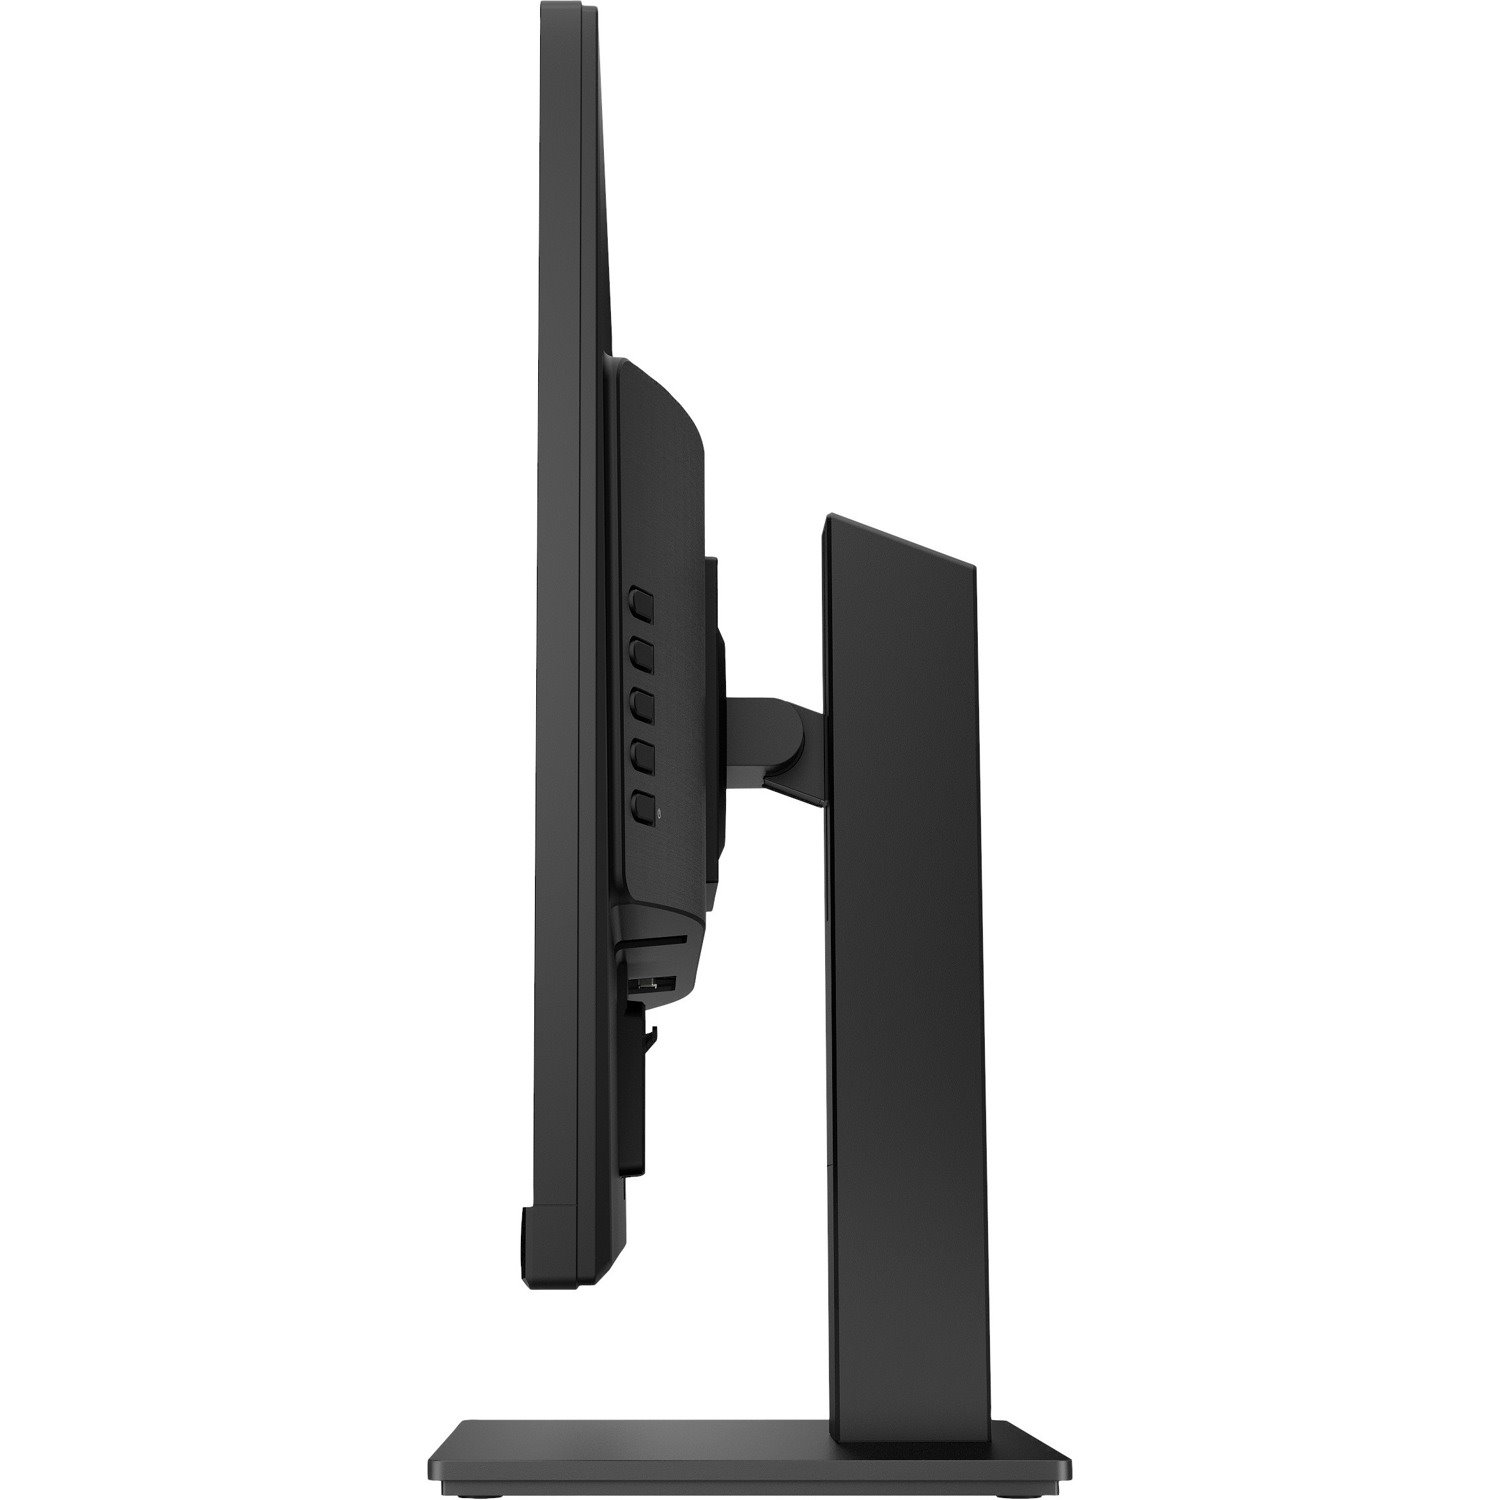 HP P27q G4 68.6 cm (27") WQHD LED LCD Monitor - 16:9 - Black